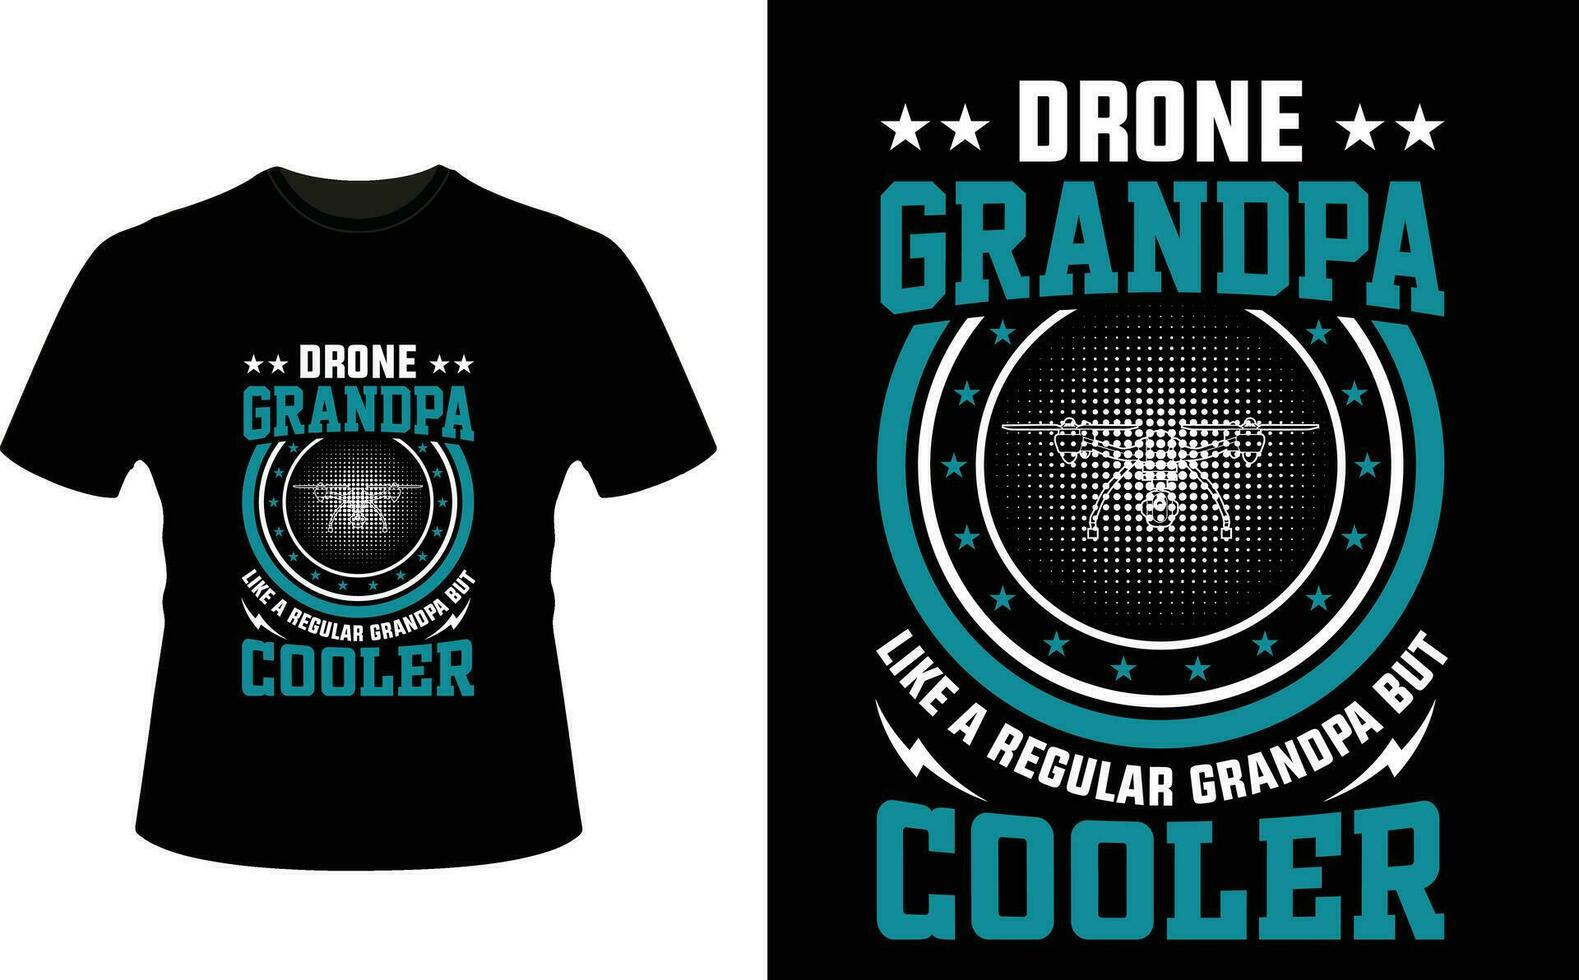 Drohne Opa mögen ein regulär Opa aber Kühler oder Großvater T-Shirt Design oder Großvater Tag t Hemd Design vektor